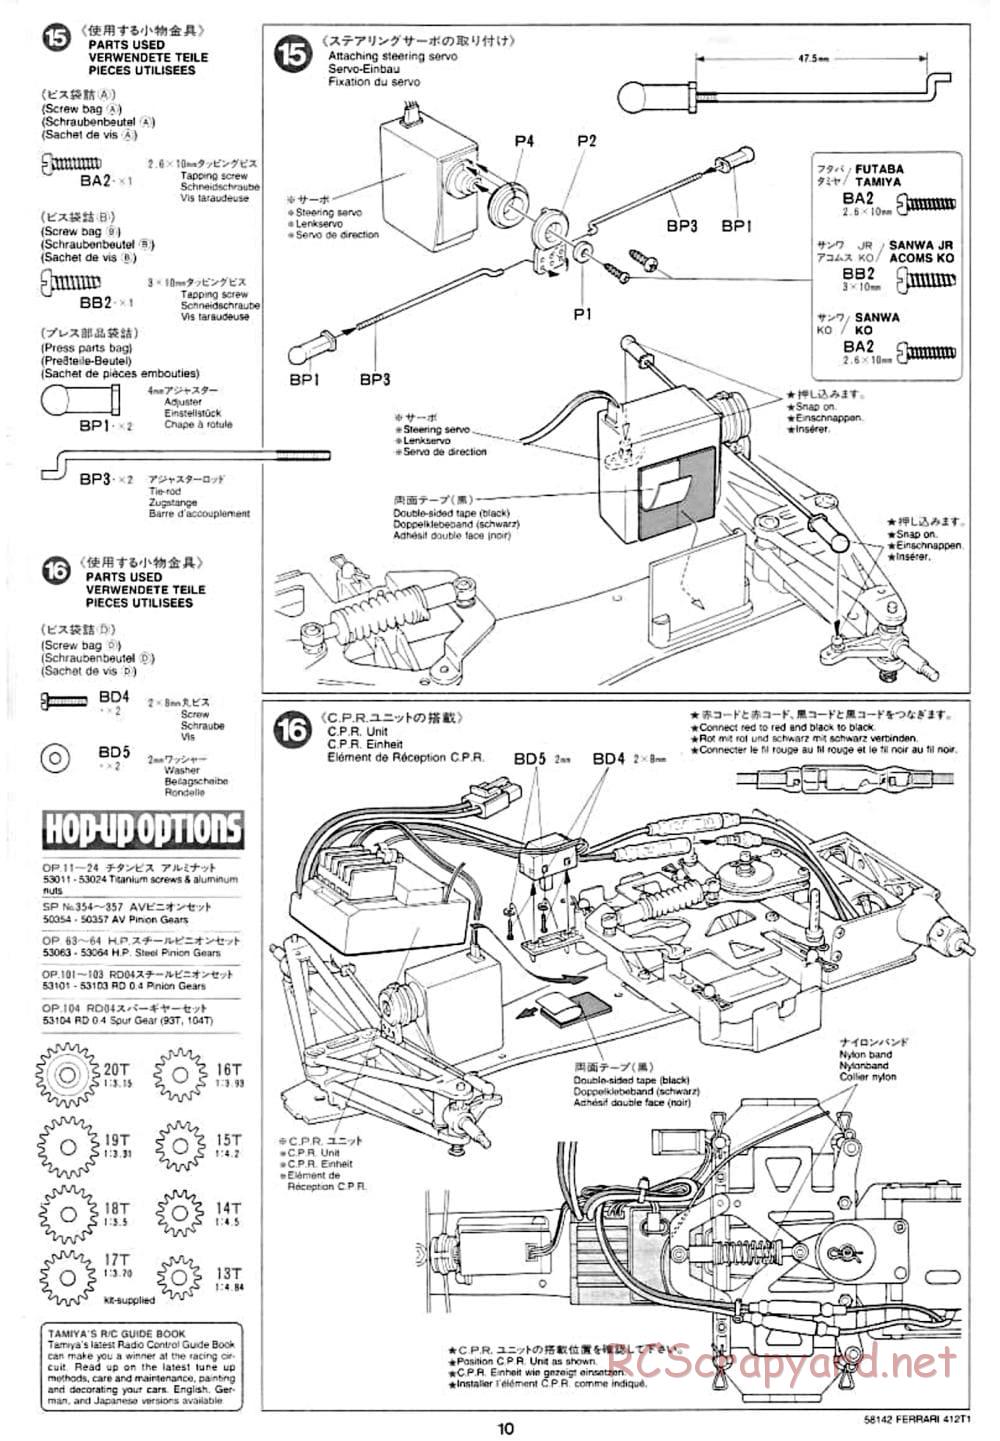 Tamiya - Ferrari 412T1 - F103 Chassis - Manual - Page 10